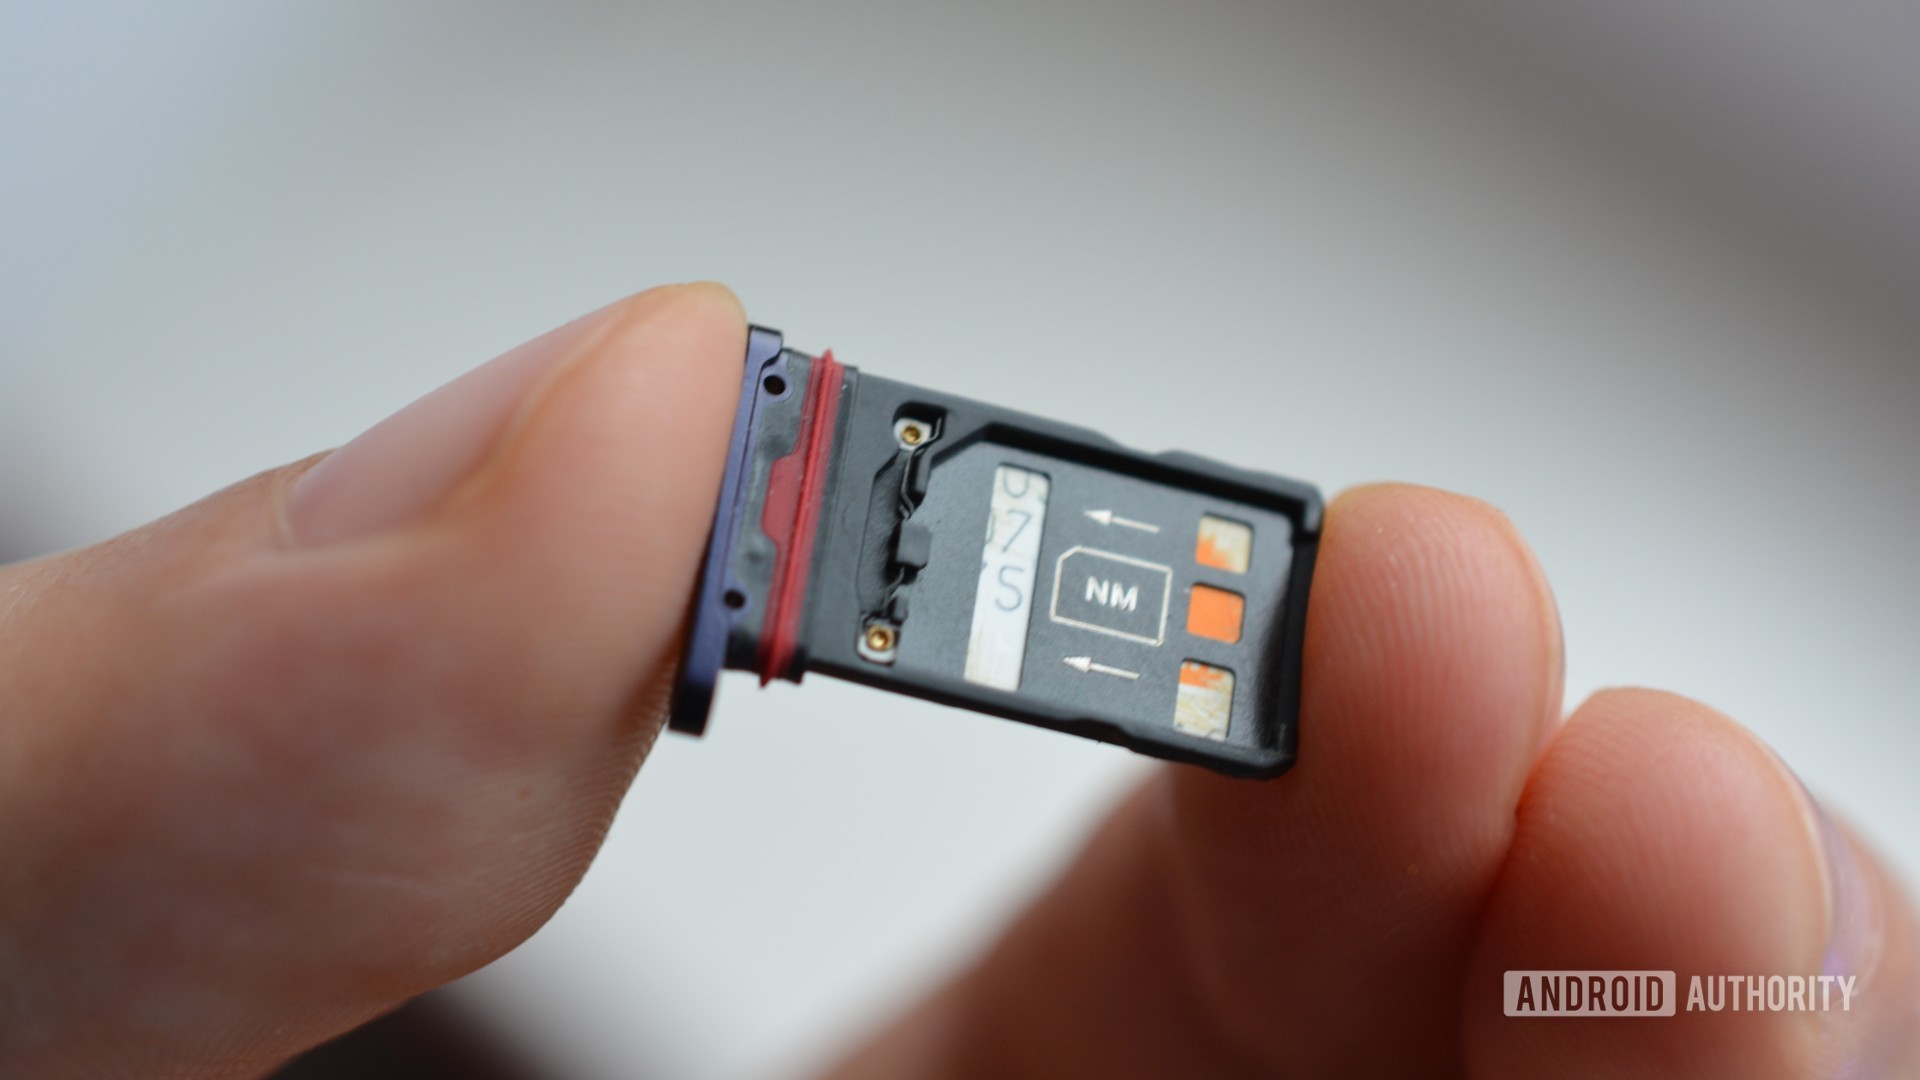 HUAWEI mate 20 Pro - Nano Memory card in the SIM tray slot - dual SIM